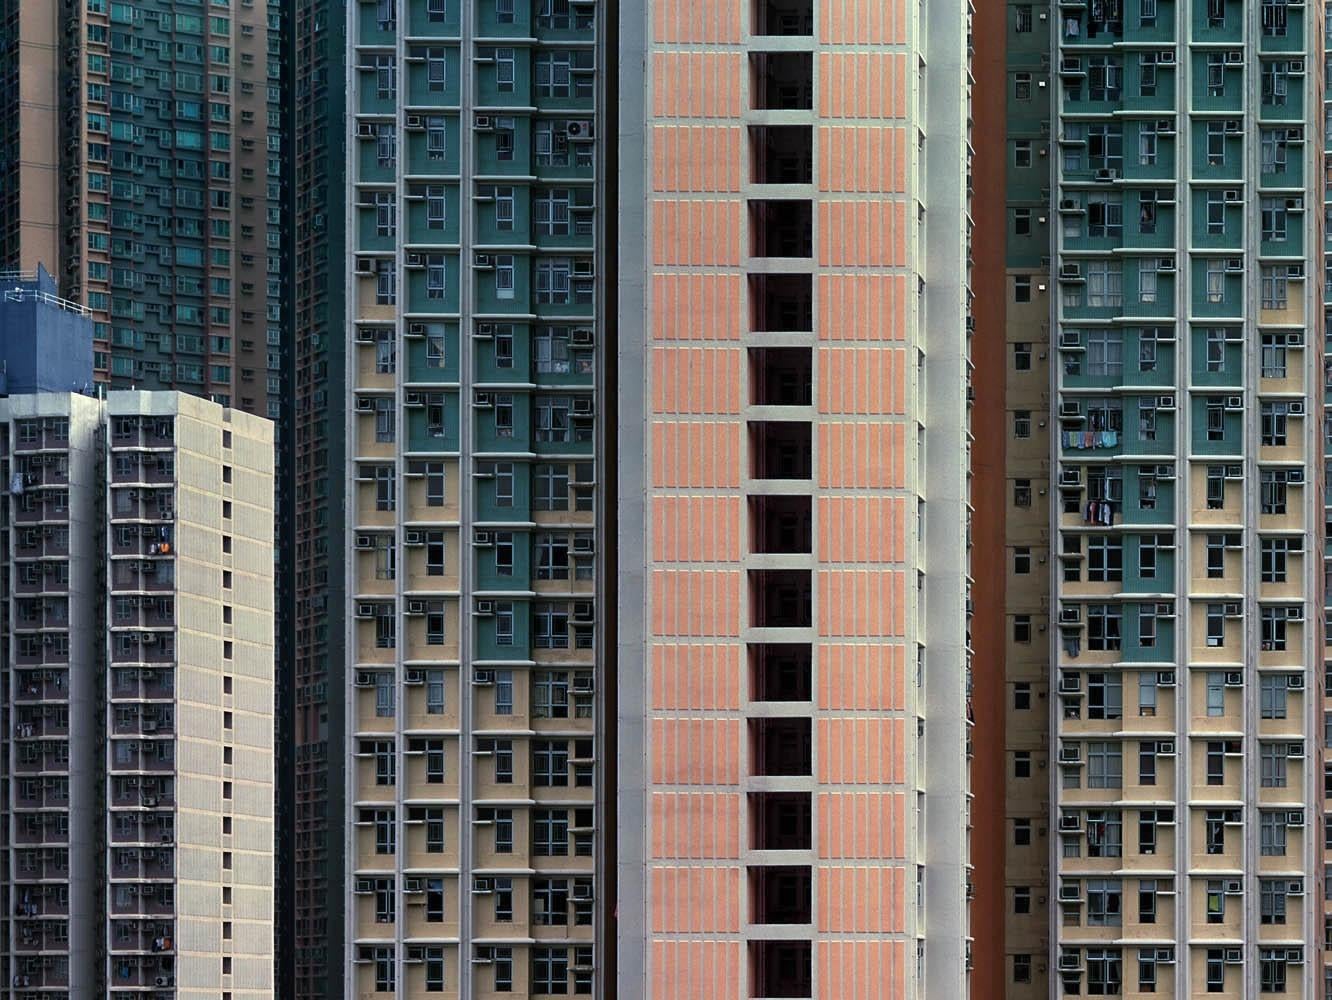 Architecture of Density #20 – Michael Wolf, City, Skyscraper, Architecture, Art For Sale 2